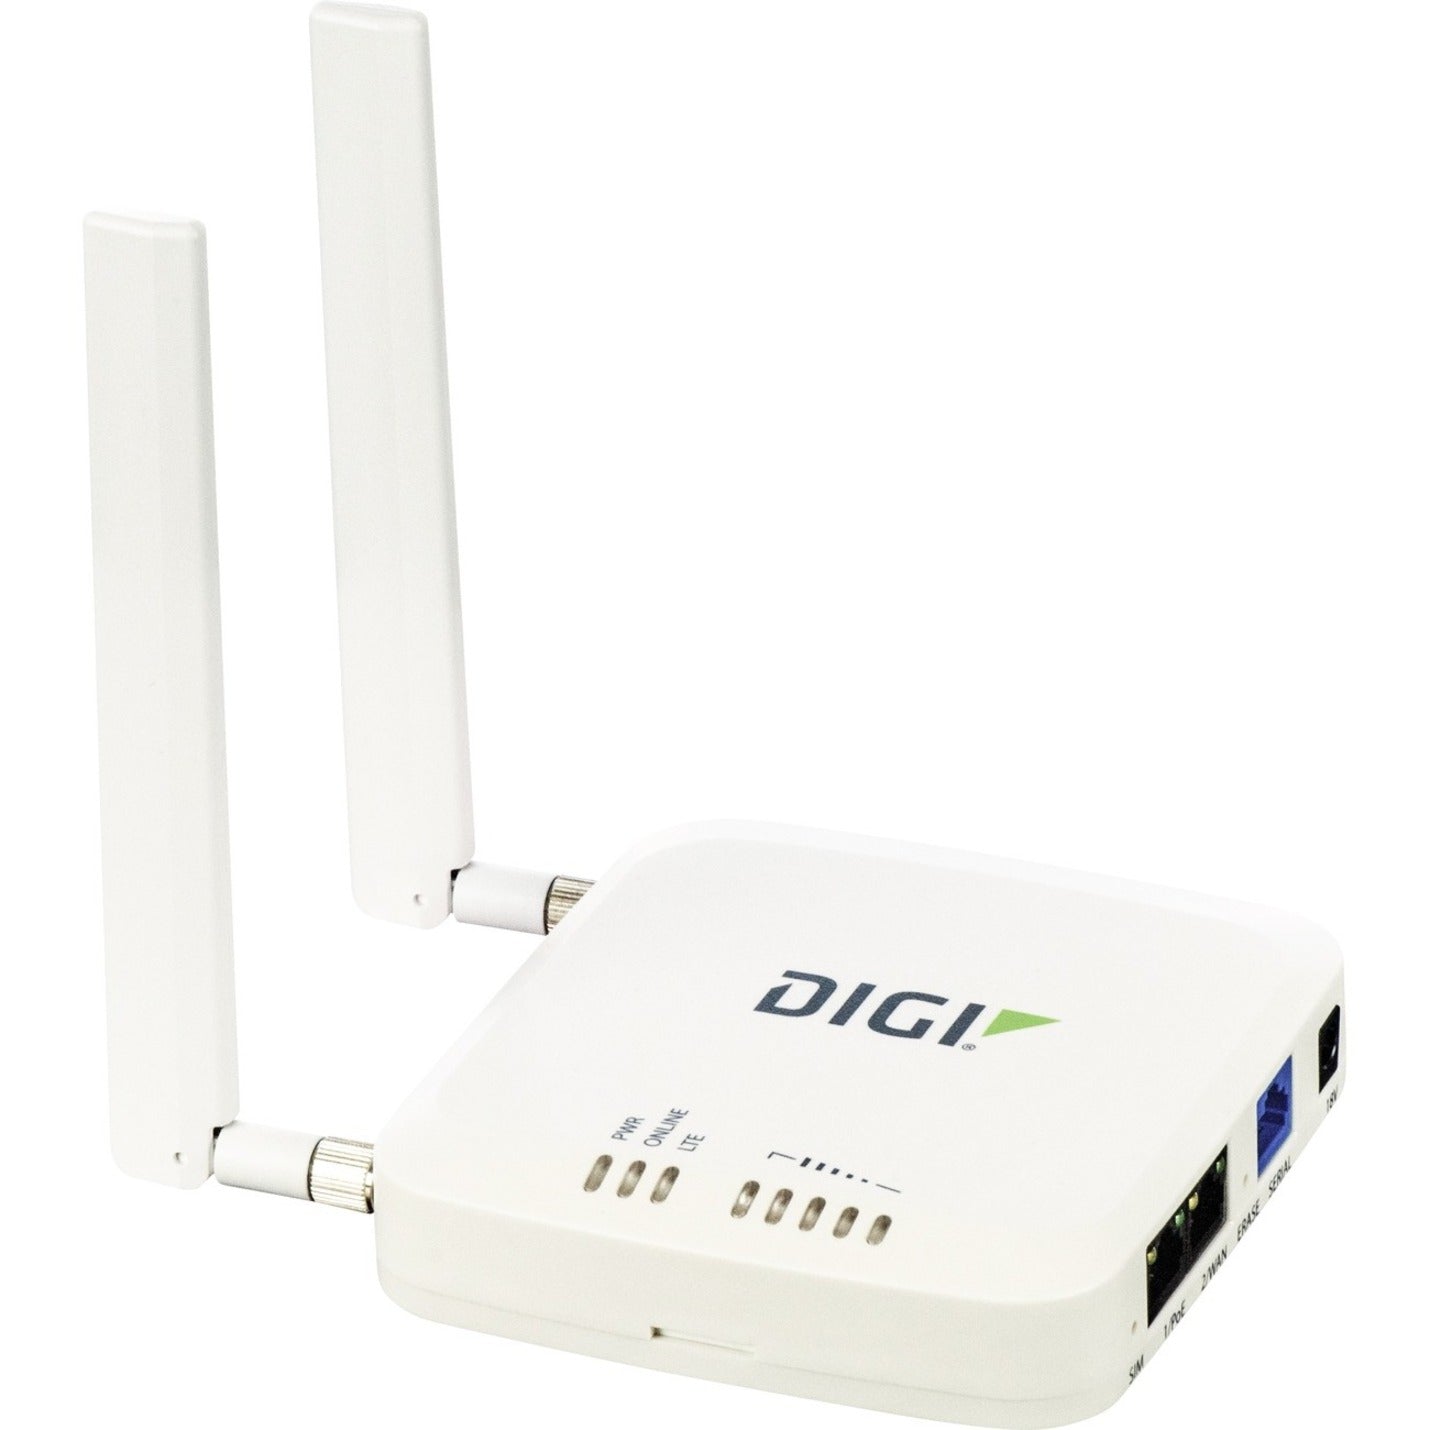 Digi EX12-R004-OUS LTE Cellular Extender For Business Continuity, 4G LTE CAT-4 RMT MOUNTING KIT